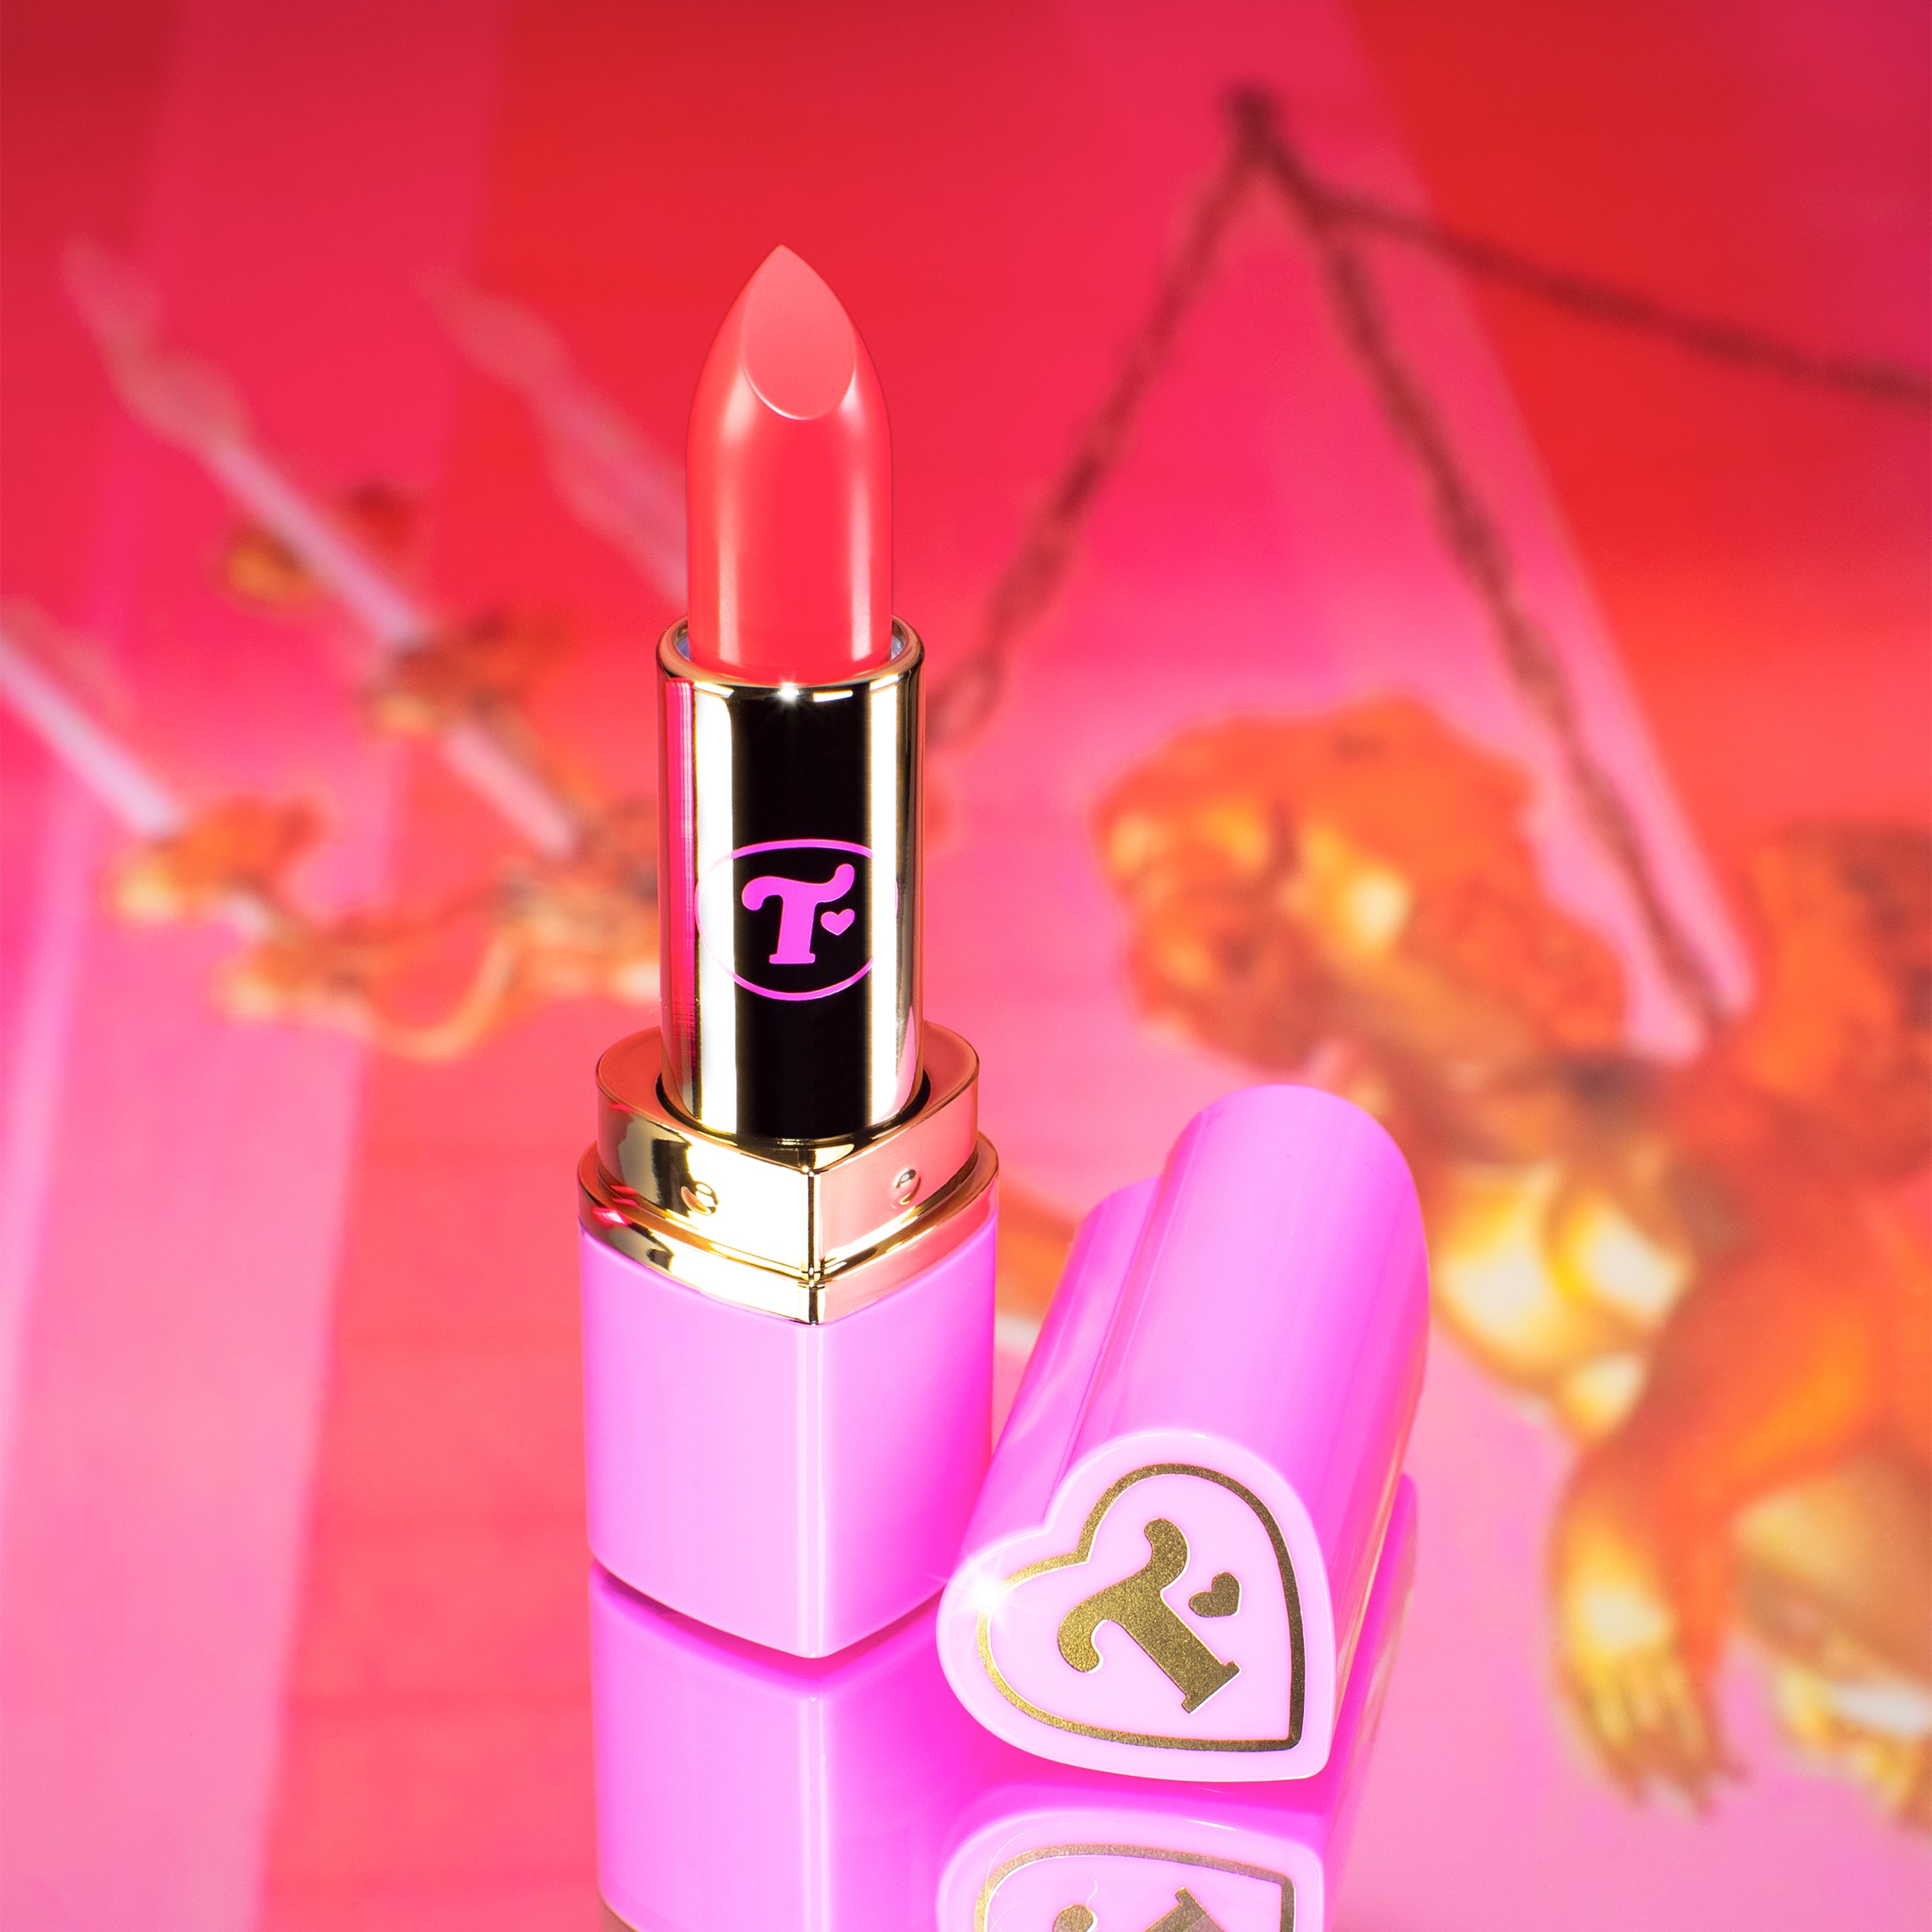 Trixie Cosmetics Lipstick